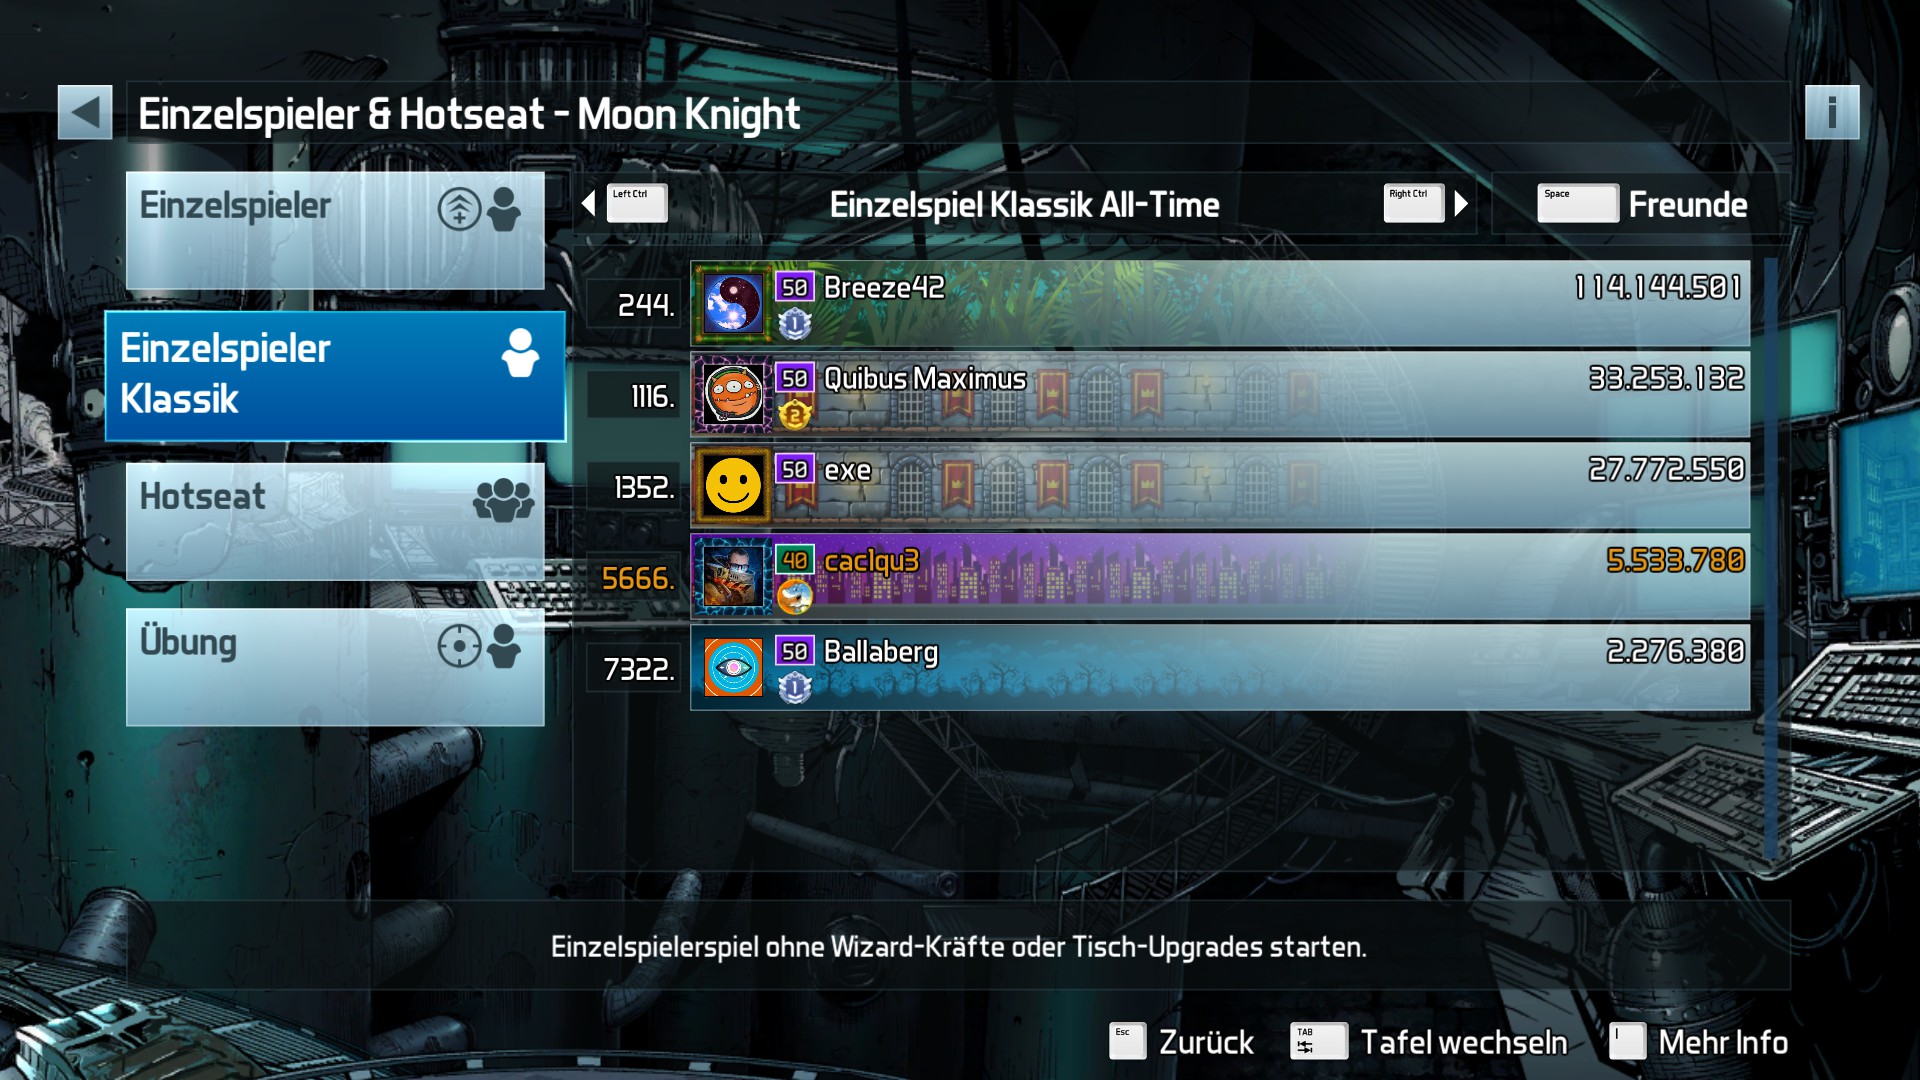 e2e4: Pinball FX3: Moon Knight [Classic] (PC) 5,533,780 points on 2022-05-17 18:47:24